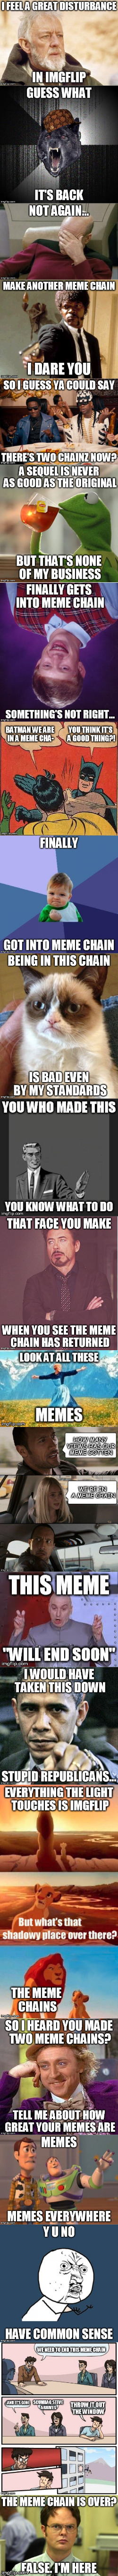 The Meme Chain Returns | image tagged in obi wan kenobi,memes,insanity wolf | made w/ Imgflip meme maker